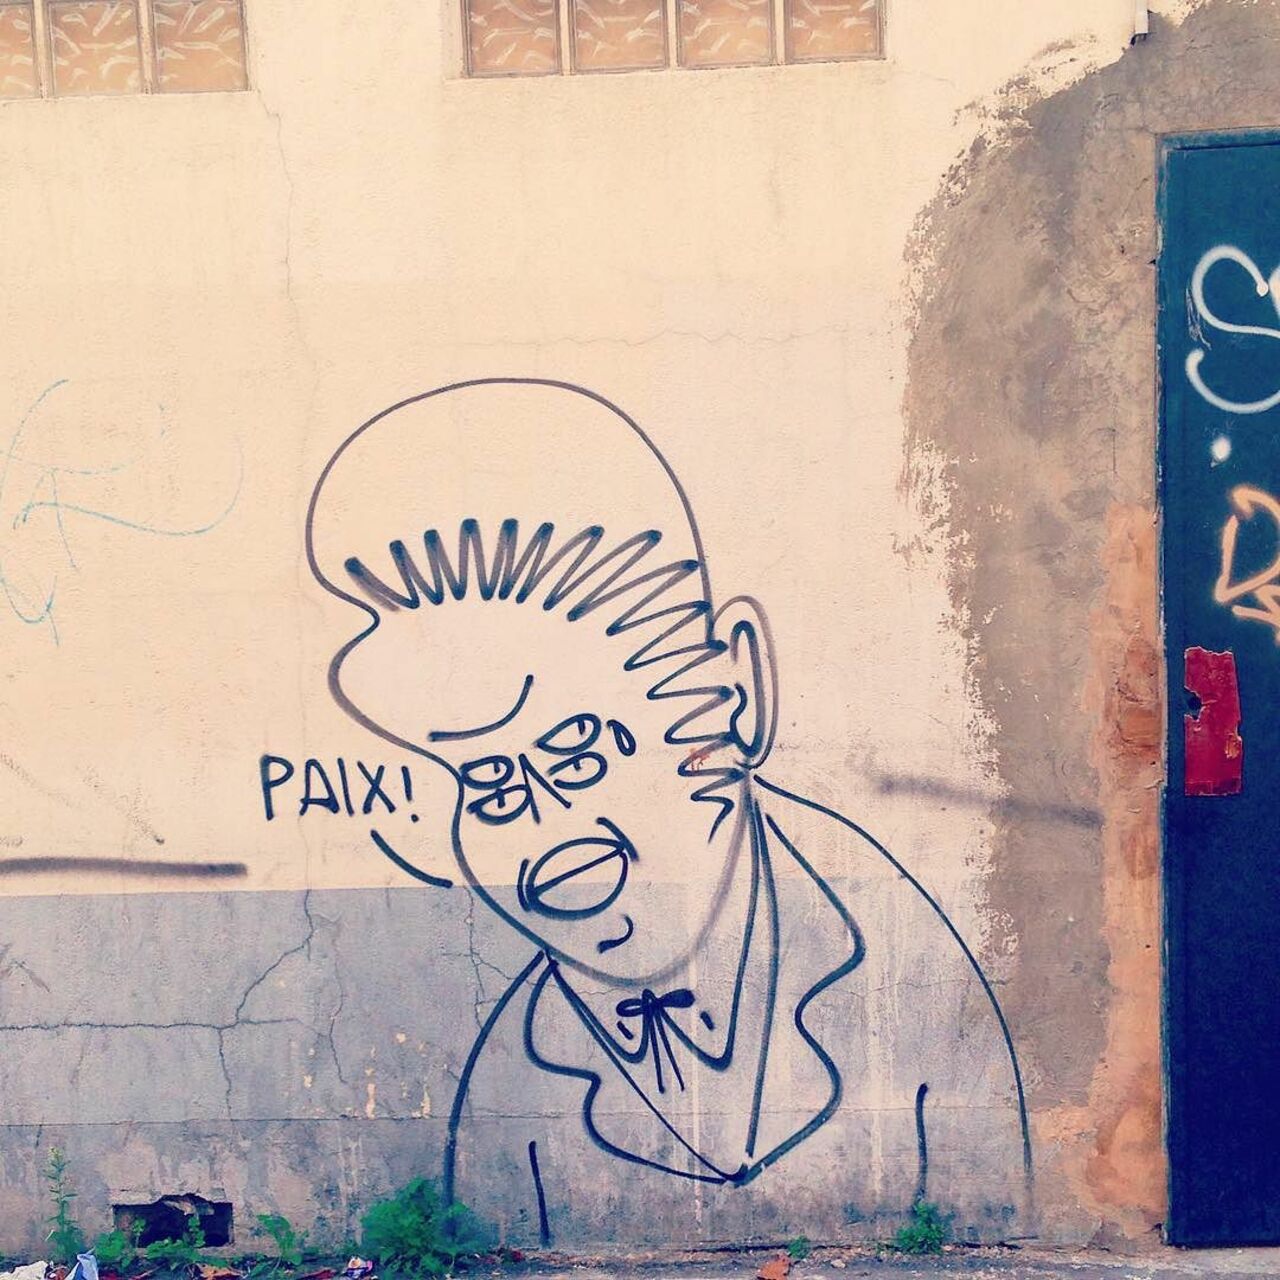 #Paris #graffiti photo by @ore25fr http://ift.tt/1jLLsmj #StreetArt https://t.co/JQWZsoYSvf